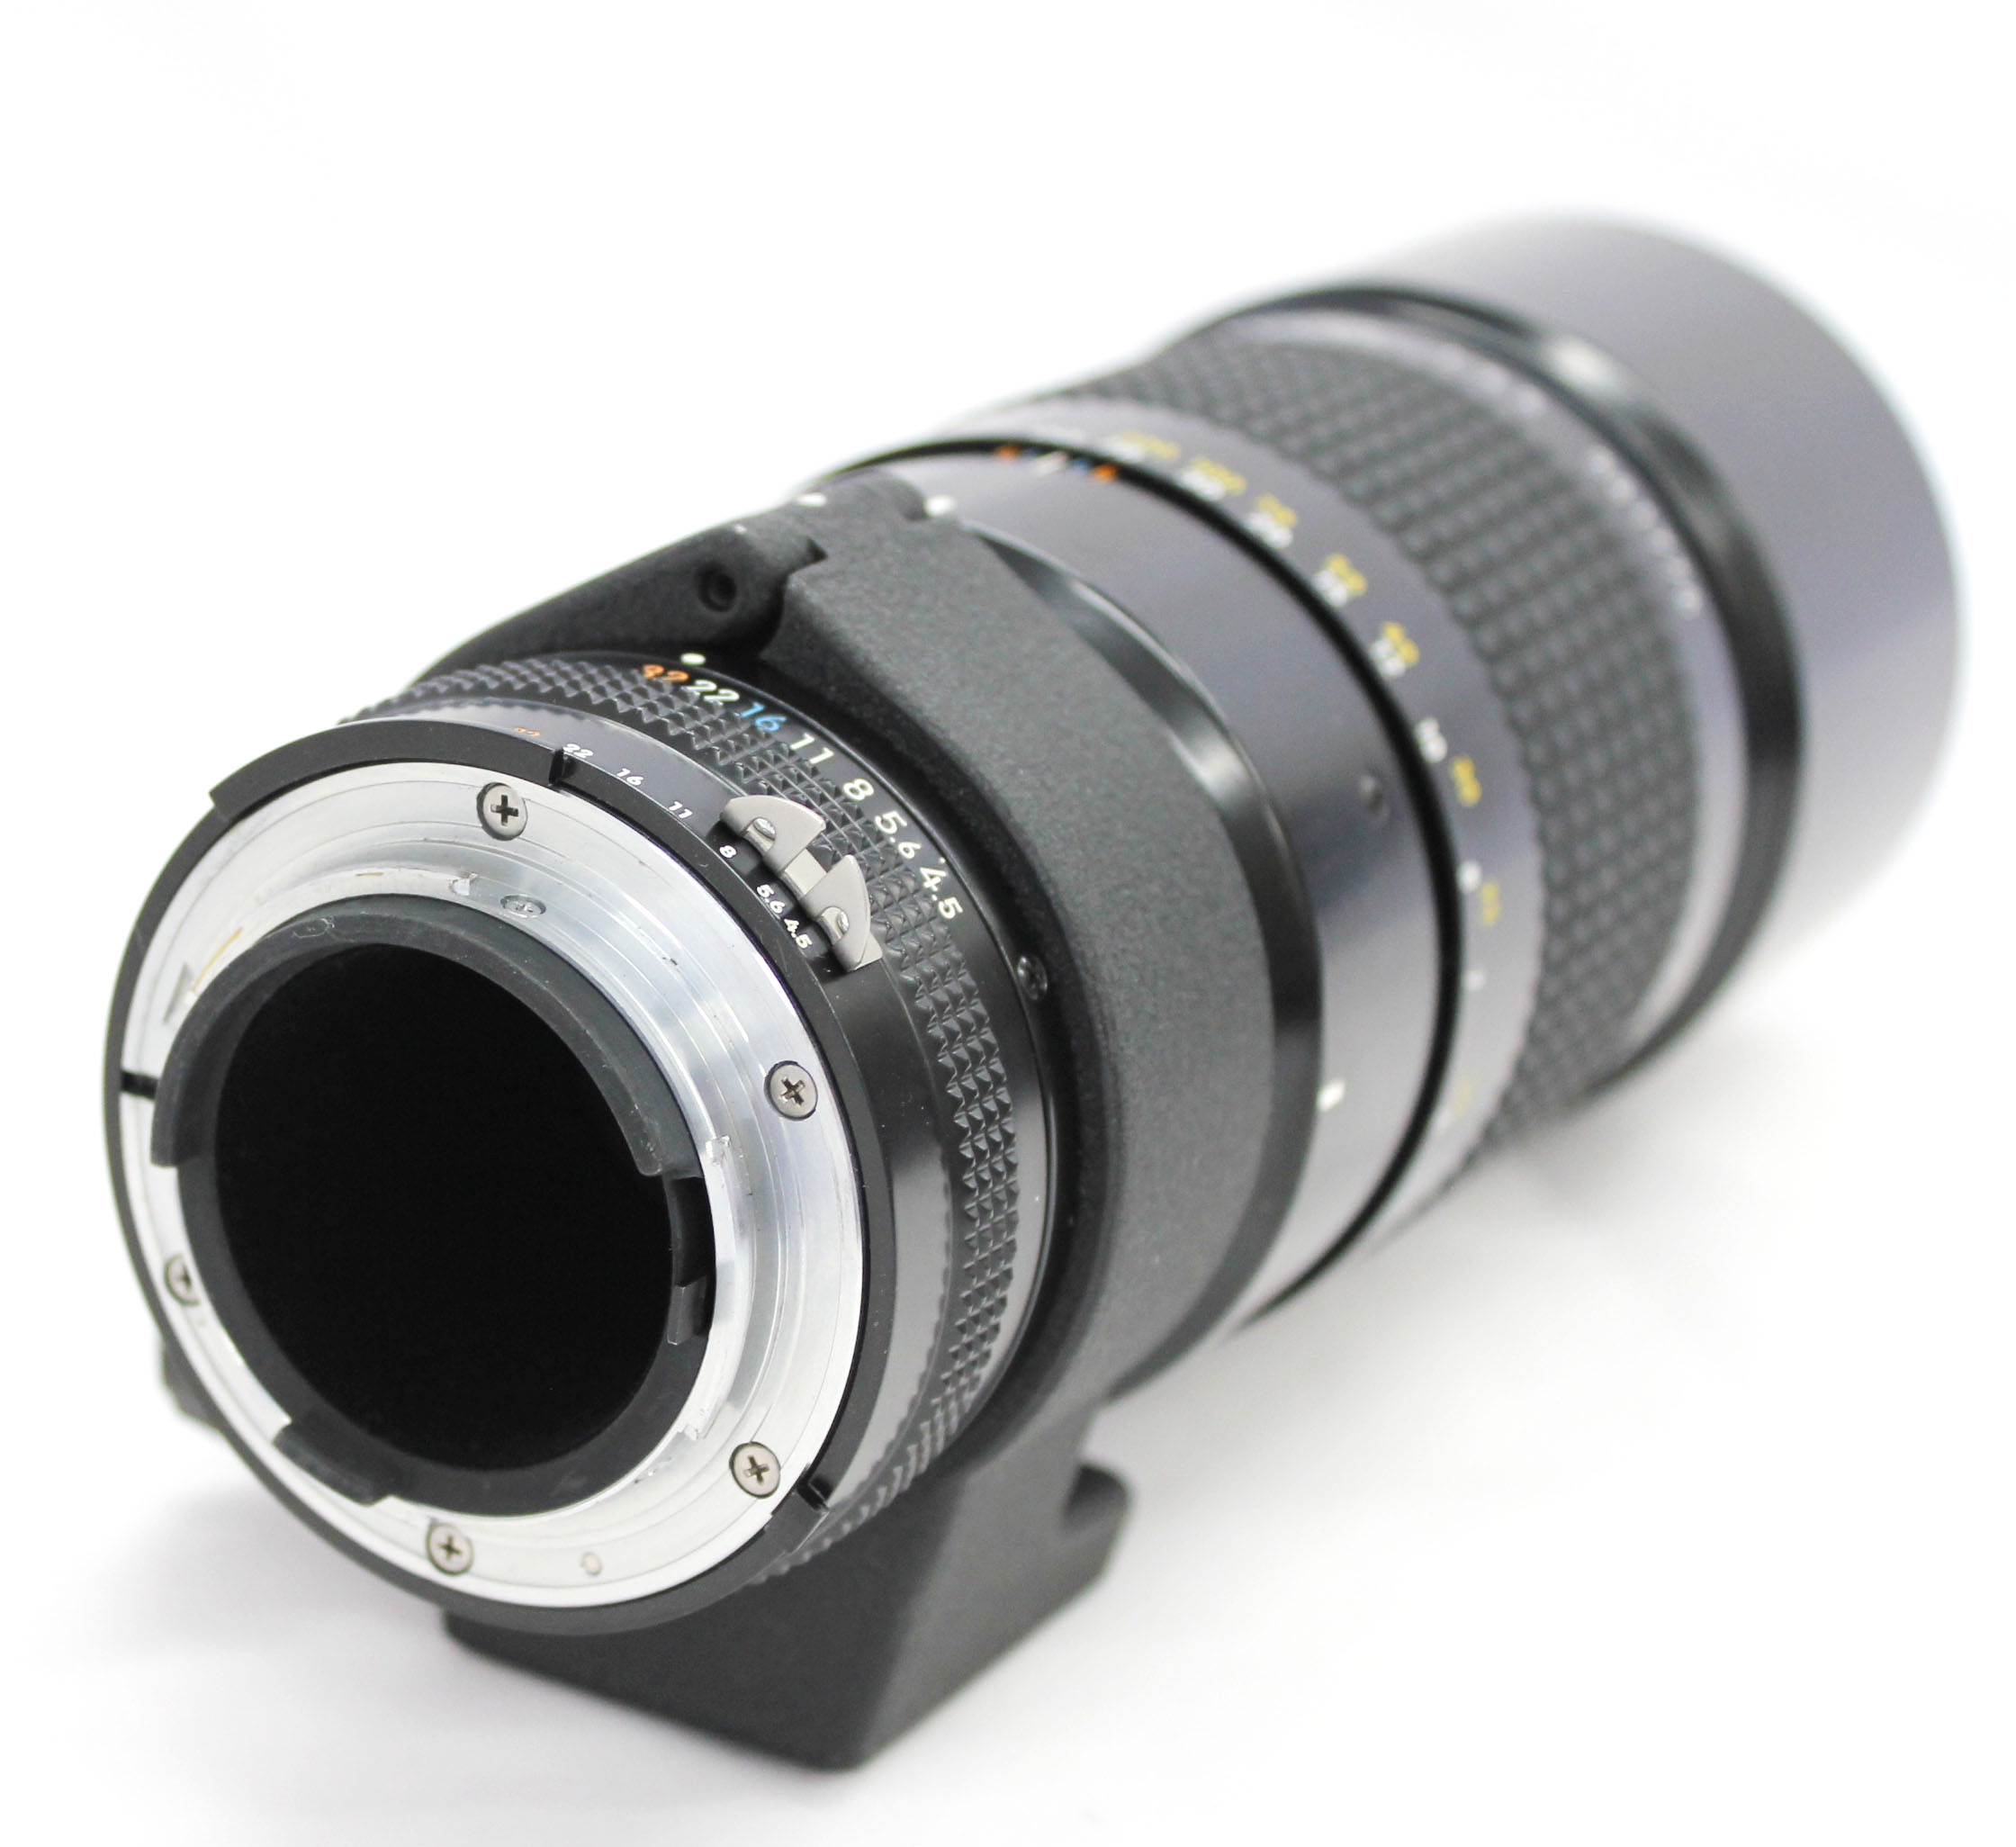  Nikon Ai-s Ais Nikkor 300mm F/4.5 MF Telephoto Lens from Japan Photo 2